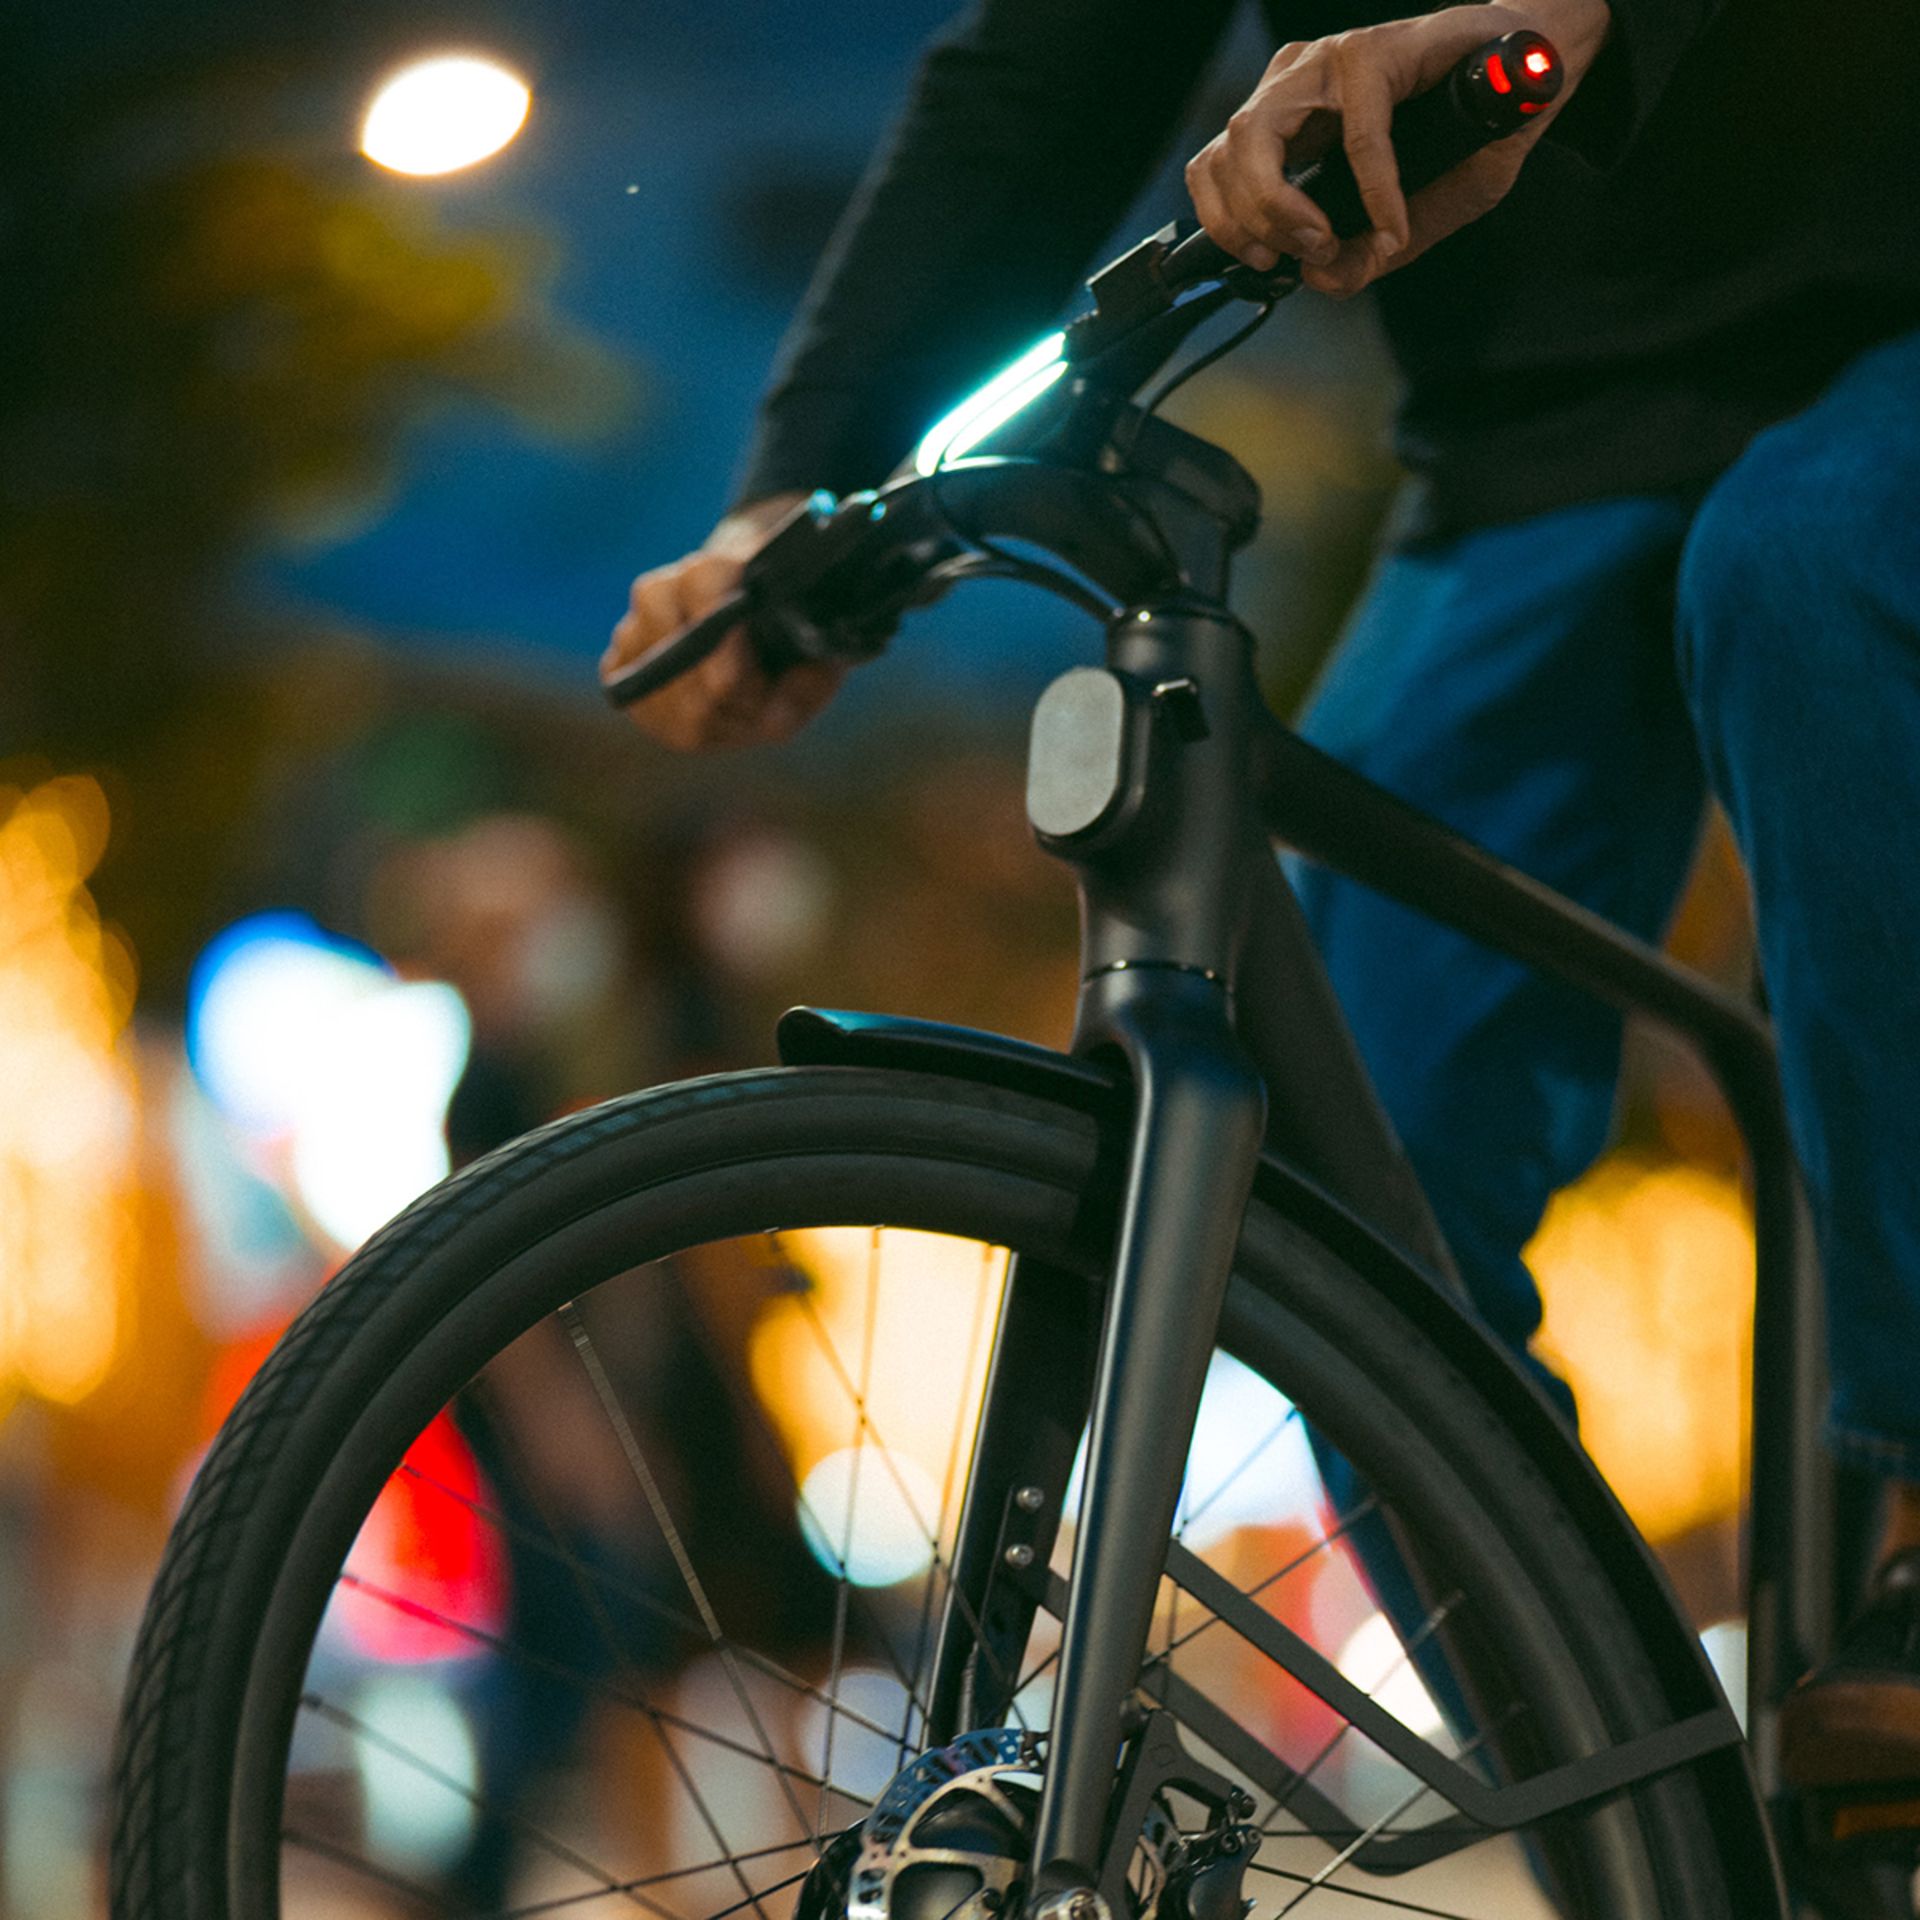 Modmo Saigon+ Electric Bicycle - RRP £2800 - Size L (Rider 175-190cm) - Image 15 of 19